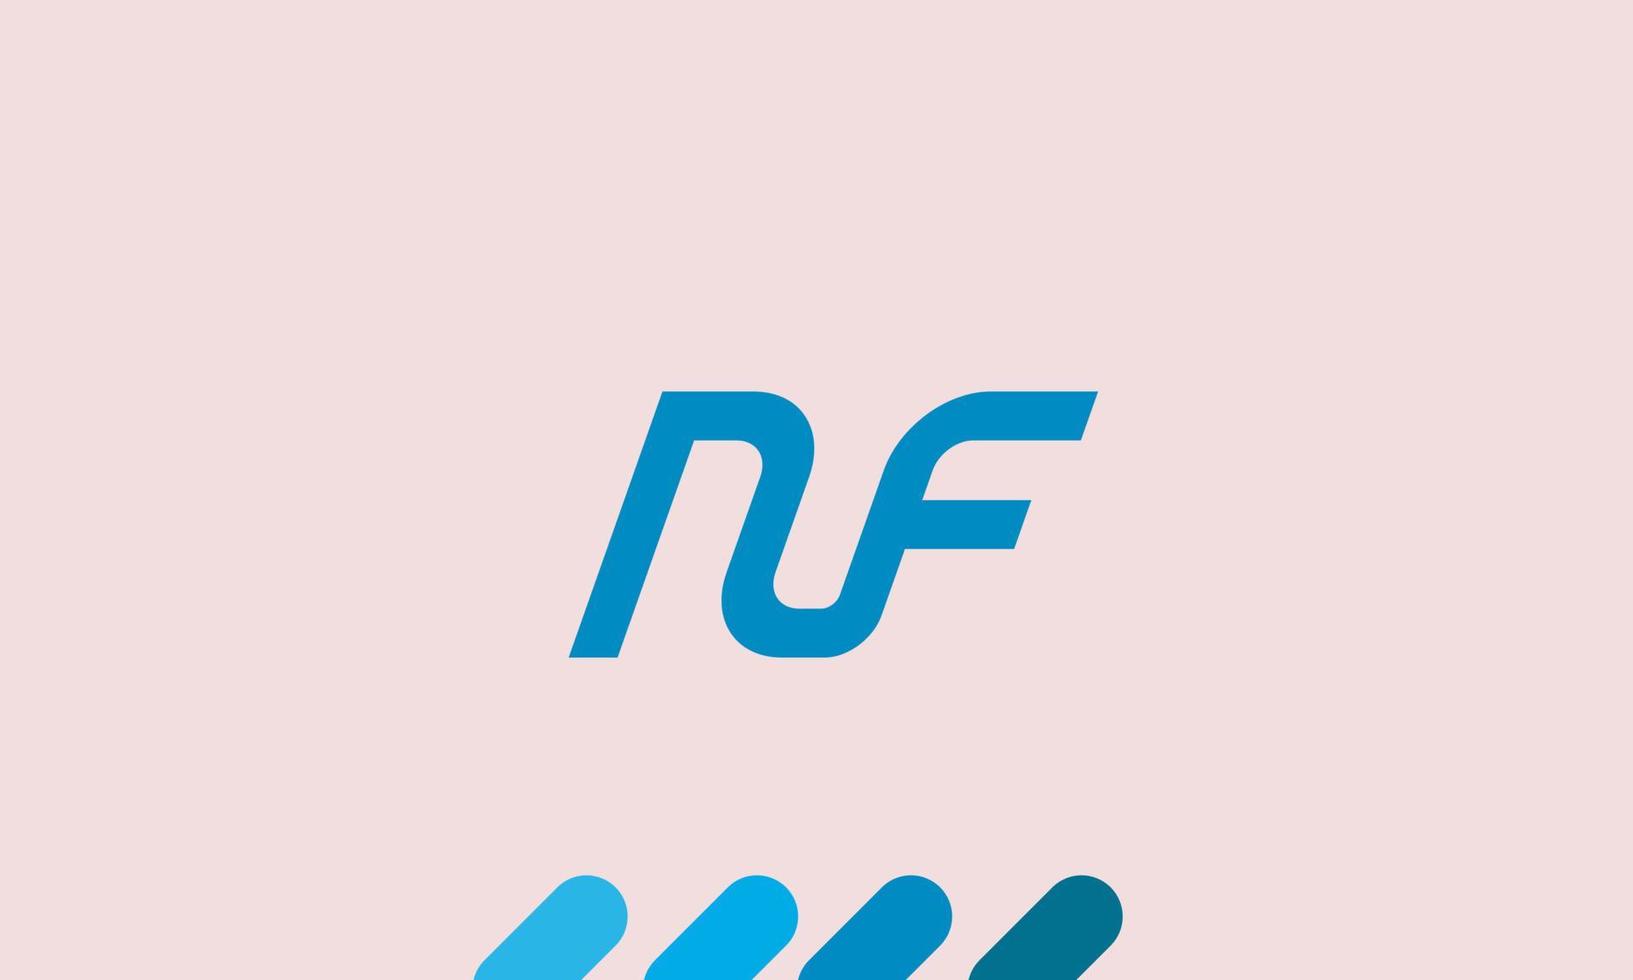 alfabet letters initialen monogram logo nf, fn, n en f vector